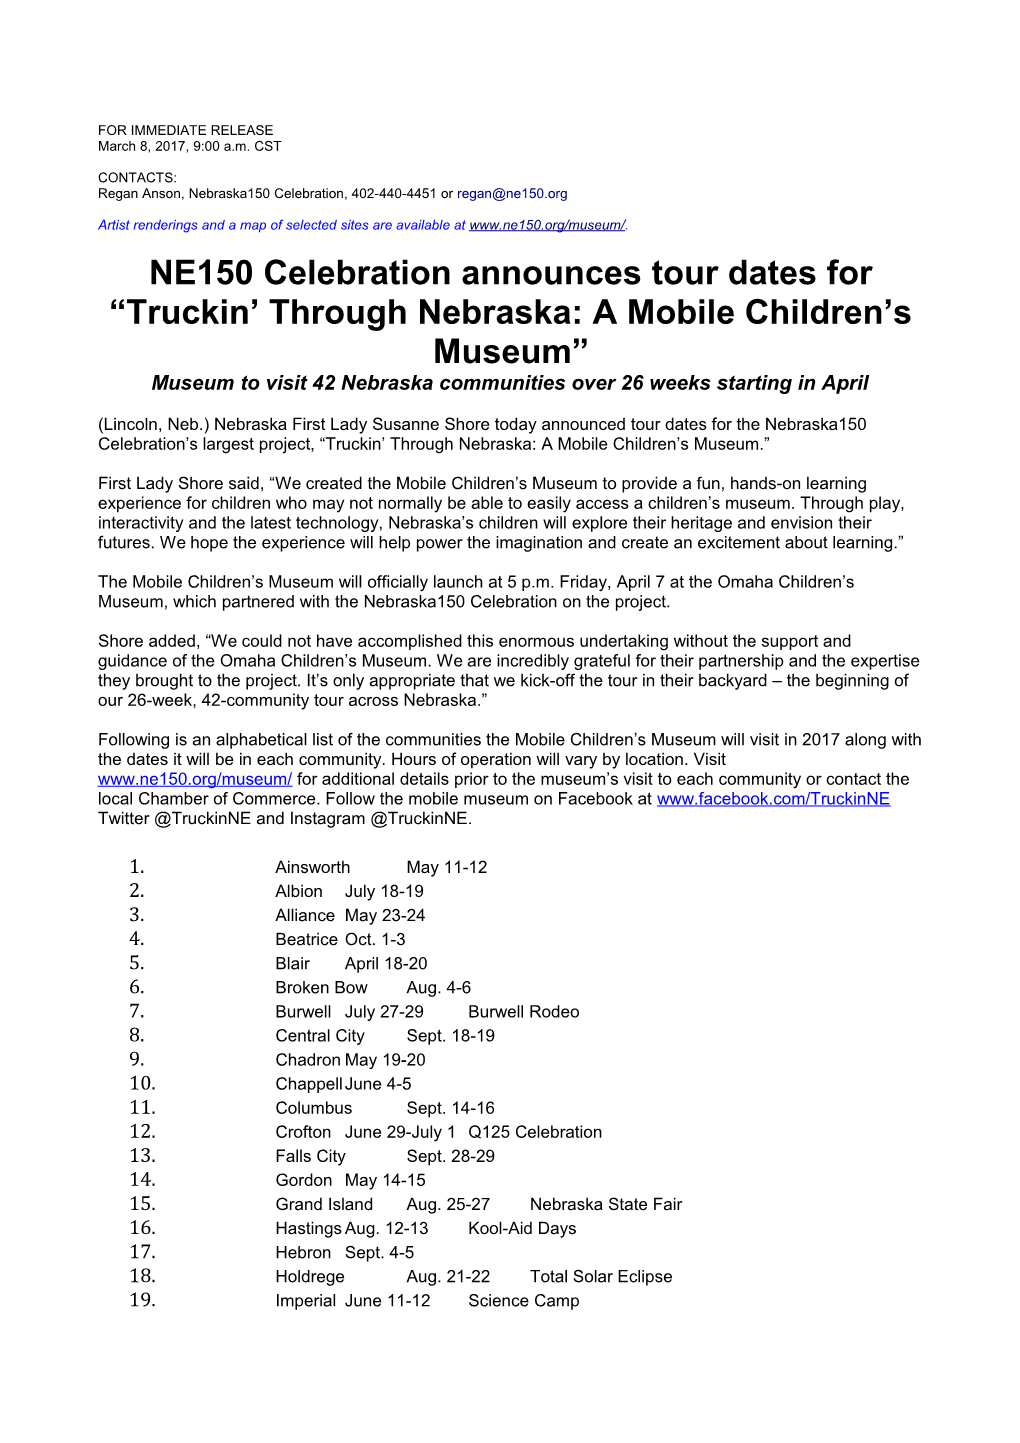 NE150 Celebration Announces Tour Dates for Truckin Through Nebraska: a Mobile Children